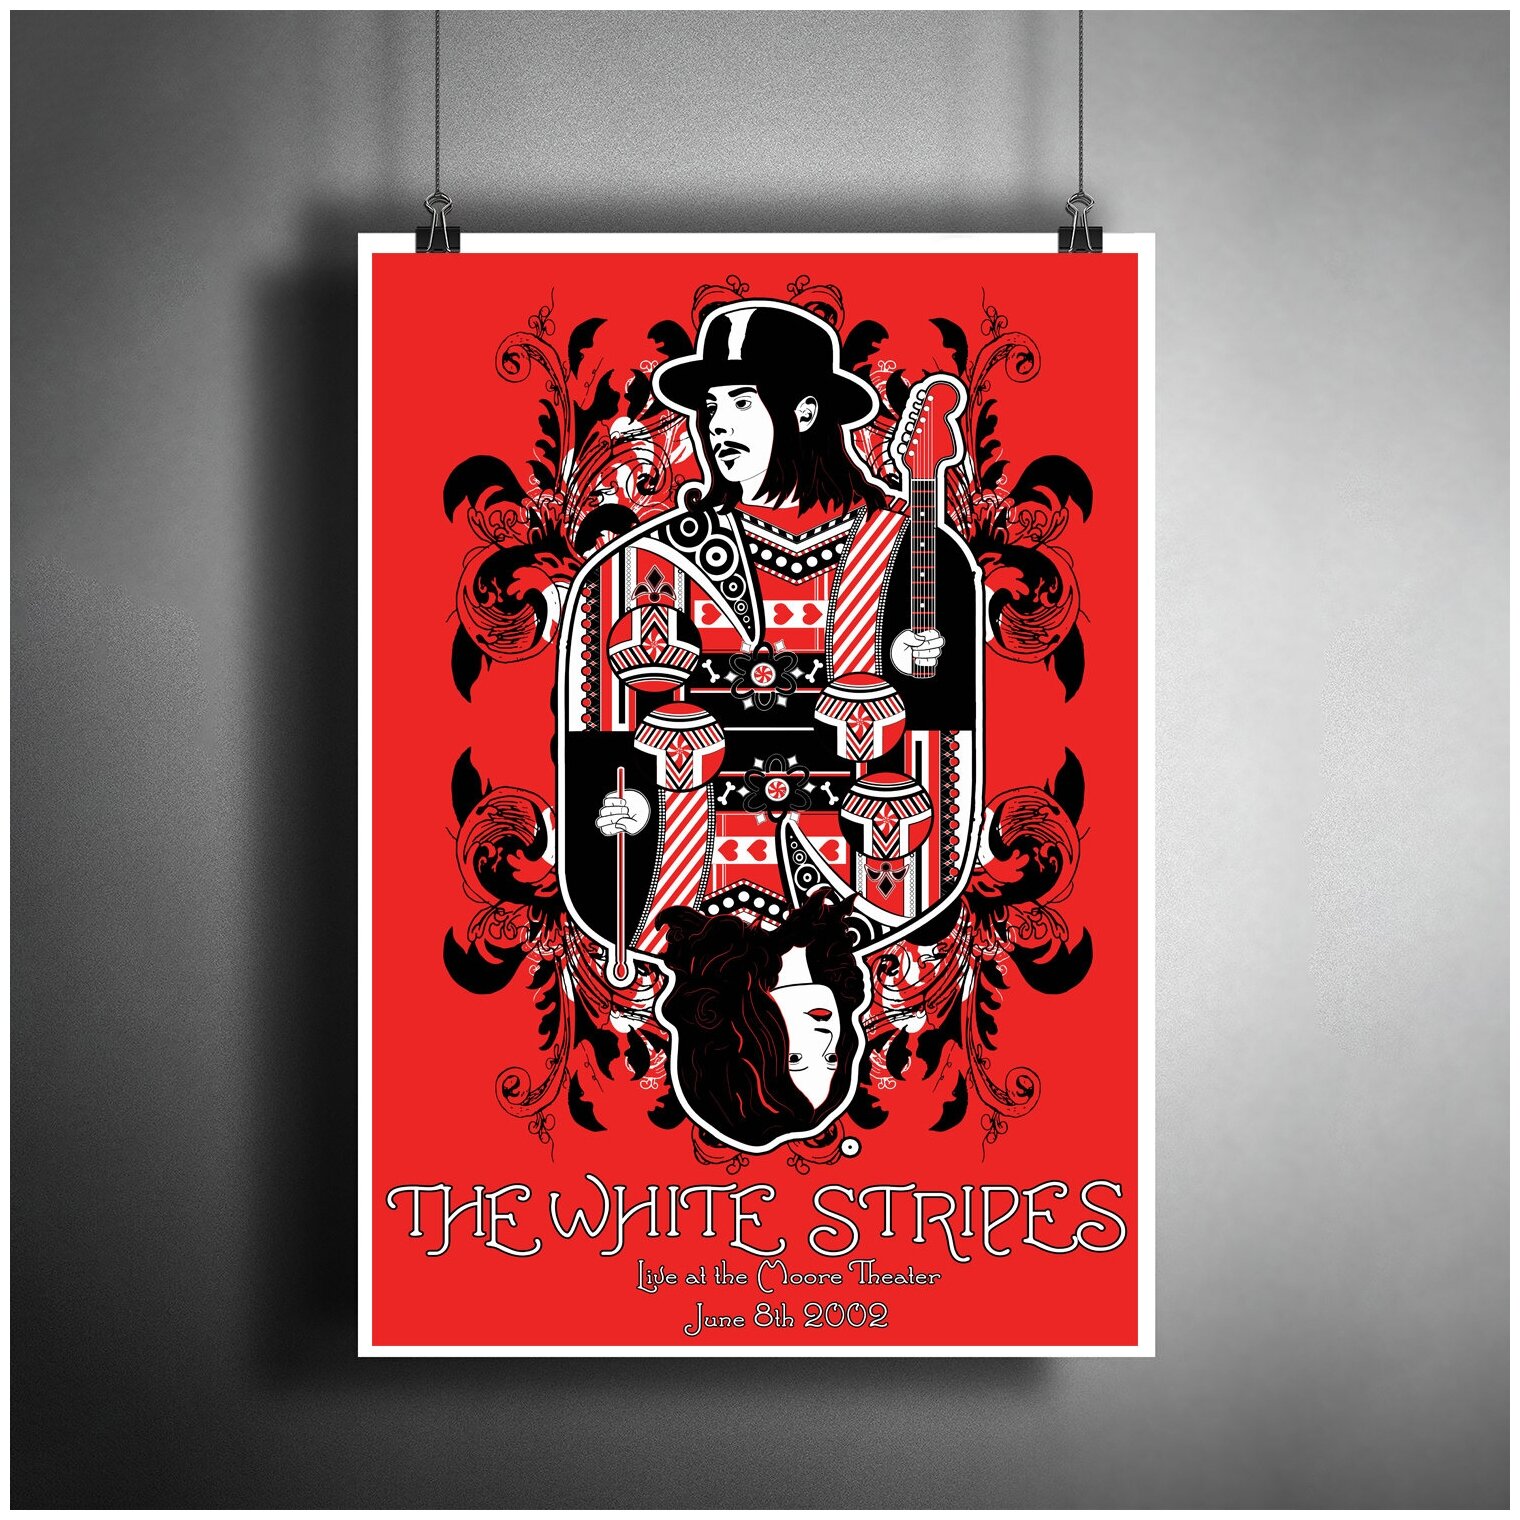 Постер плакат для интерьера "Музыка: Американская рок-группа The White Stripes" / Декор дома, офиса, комнаты A3 (297 x 420 мм)